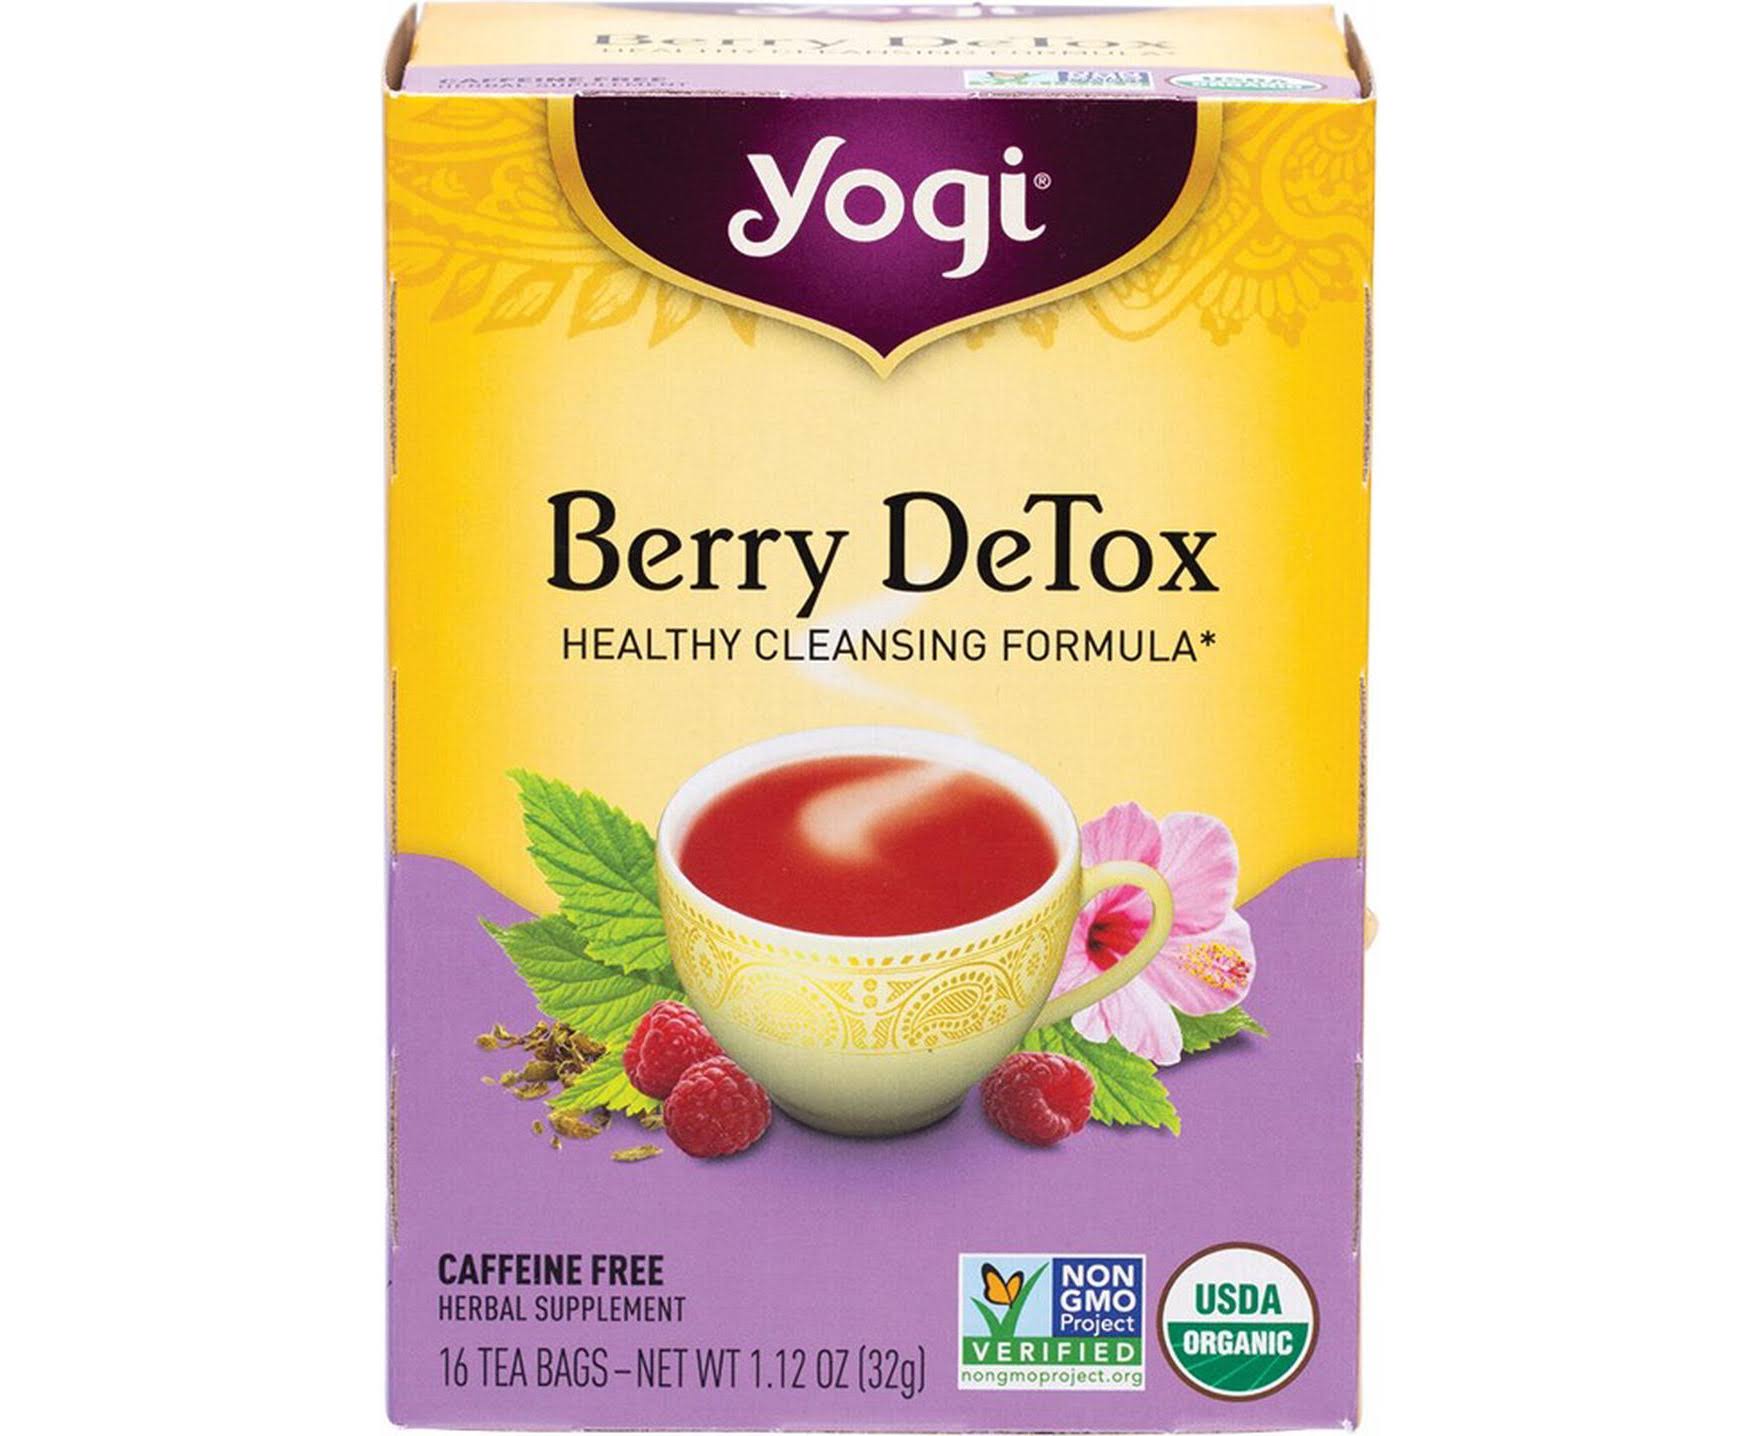 Yogi Berry DeTox Caffeine Free Herbal Supplement - 16 Tea Bags